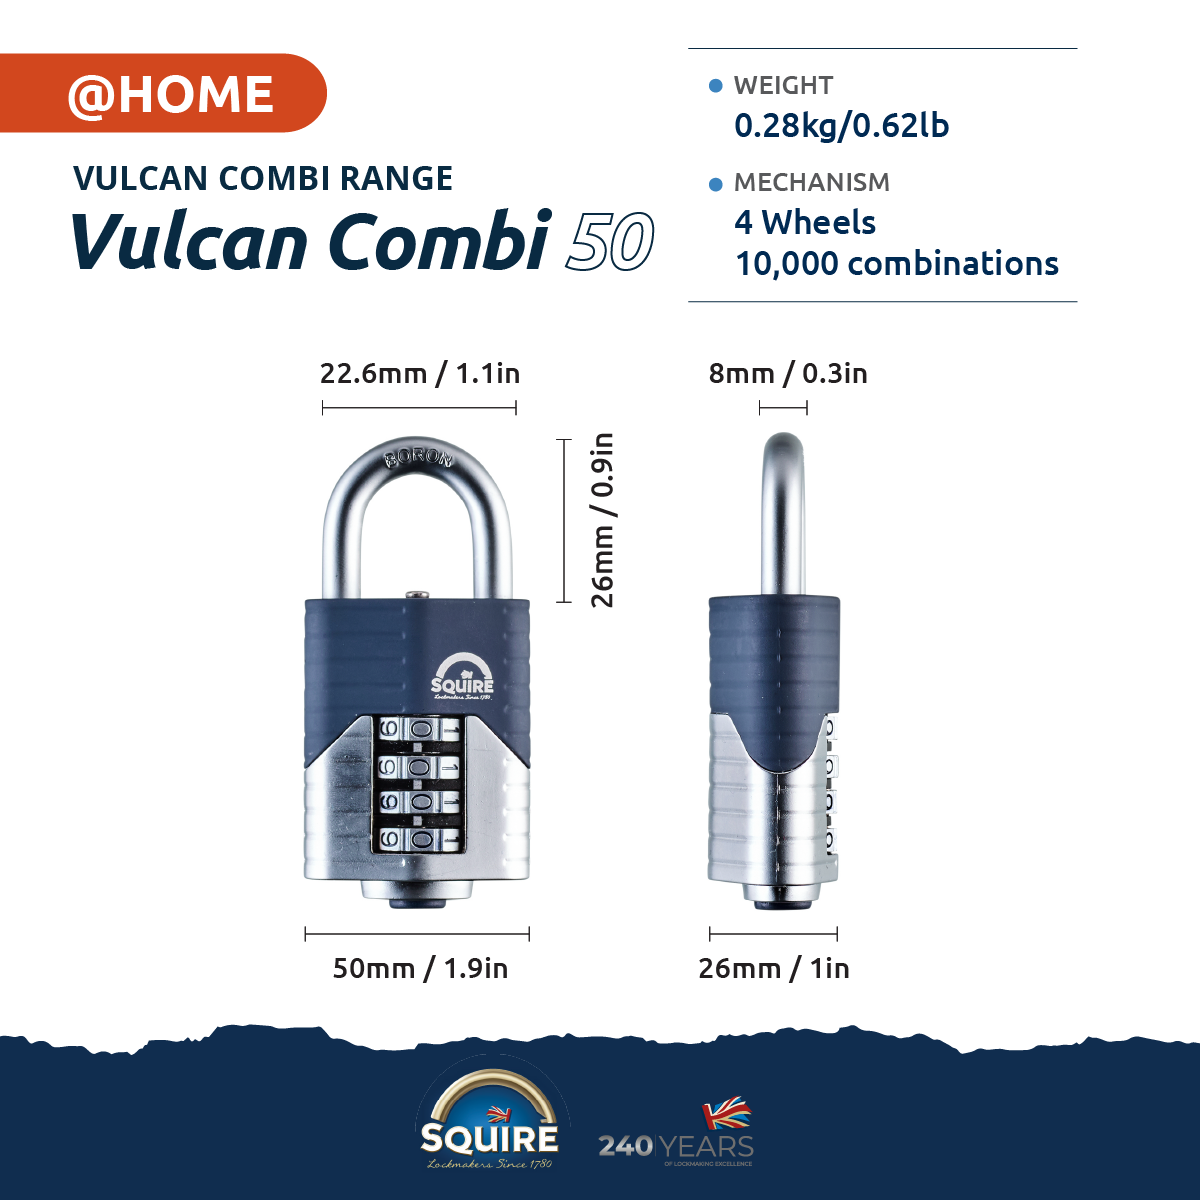 Vulcan Combi 40 Open Shackle | Boron Hardened Steel Combination Padlock